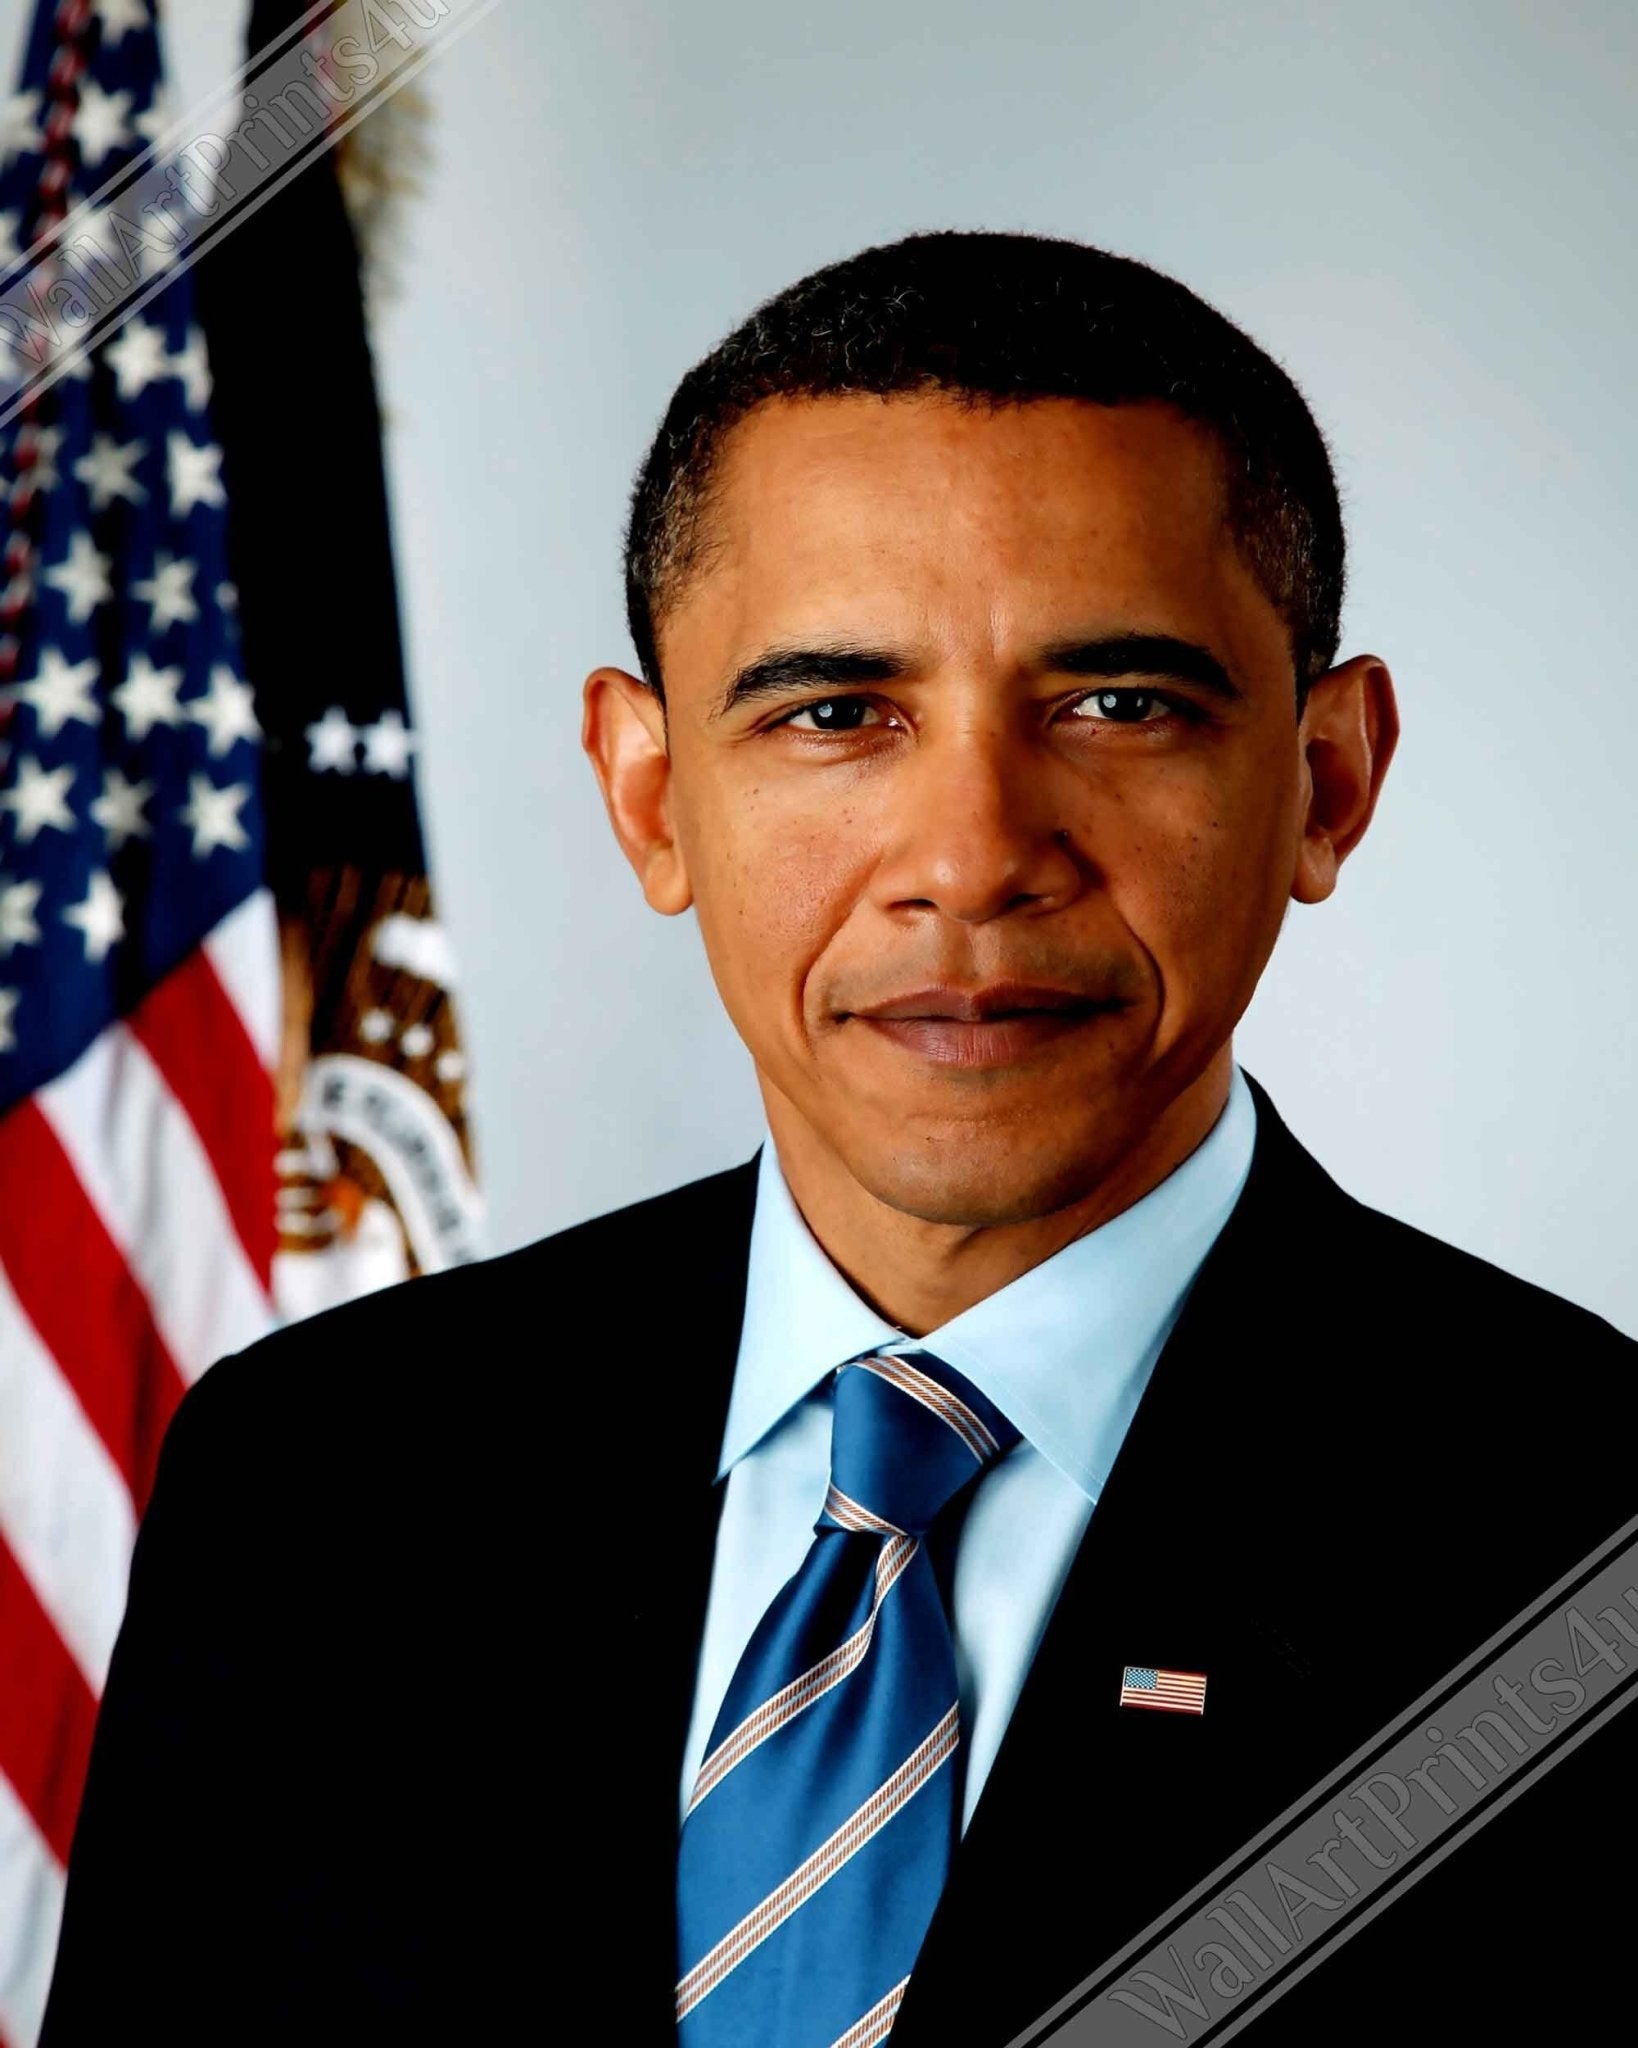 Barrack Obama Canvas, 44th President Of These United States, Vintage Photo Portrait - Barrack Obama Canvas Print - WallArtPrints4U